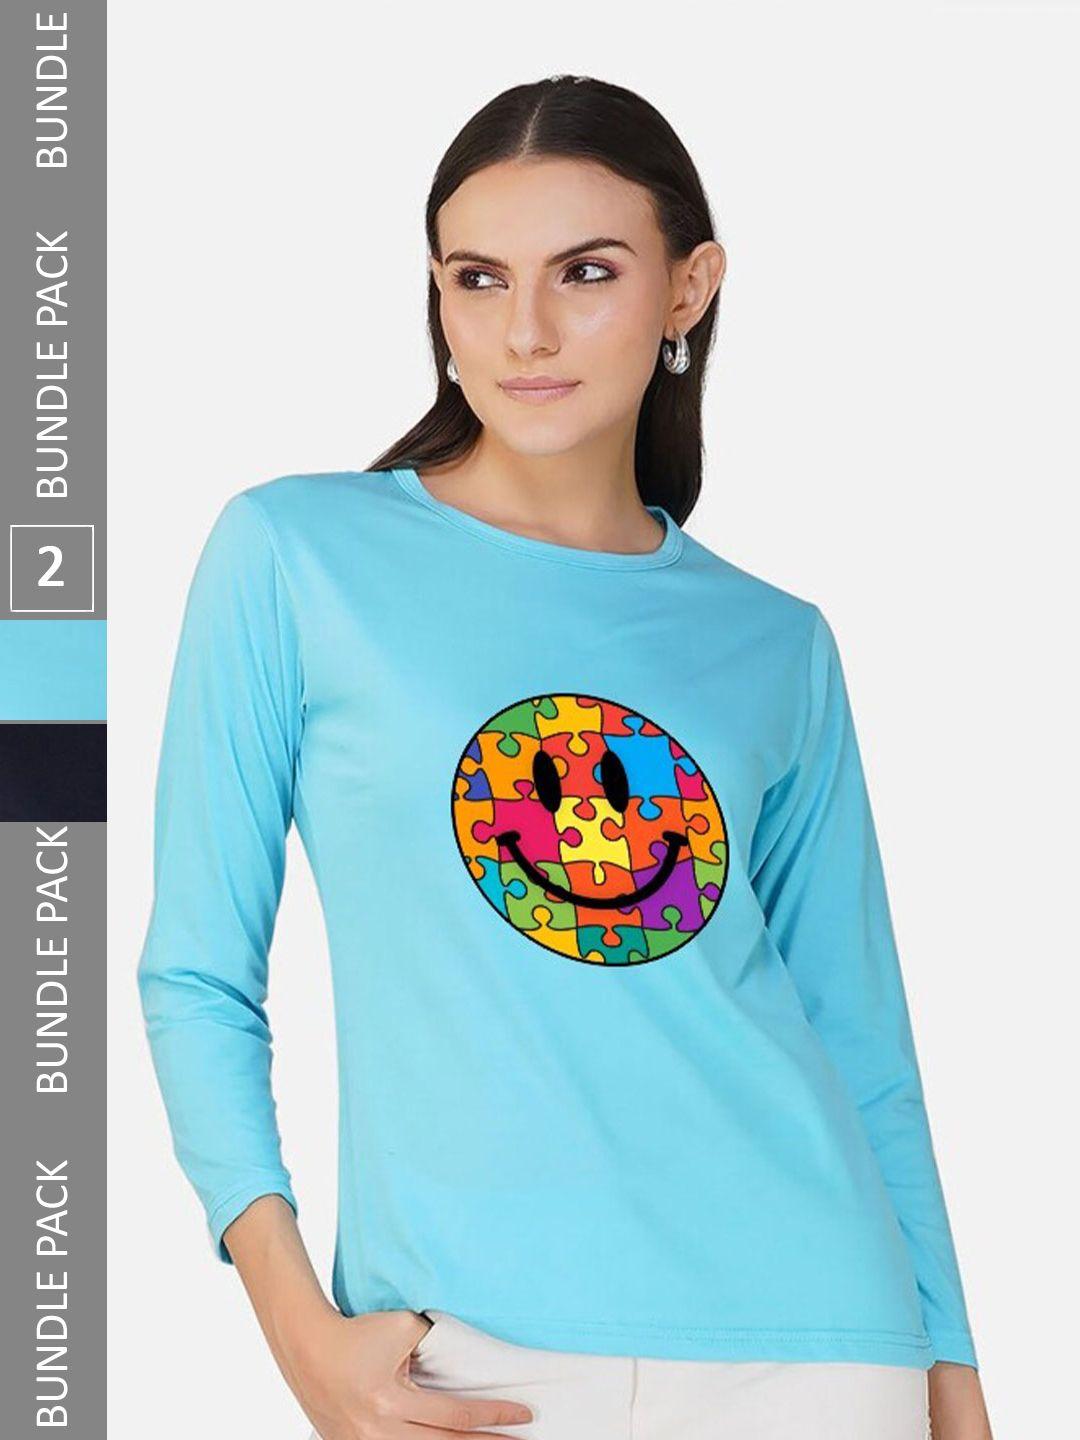 chozi women turquoise blue sports 2 high neck applique t-shirt